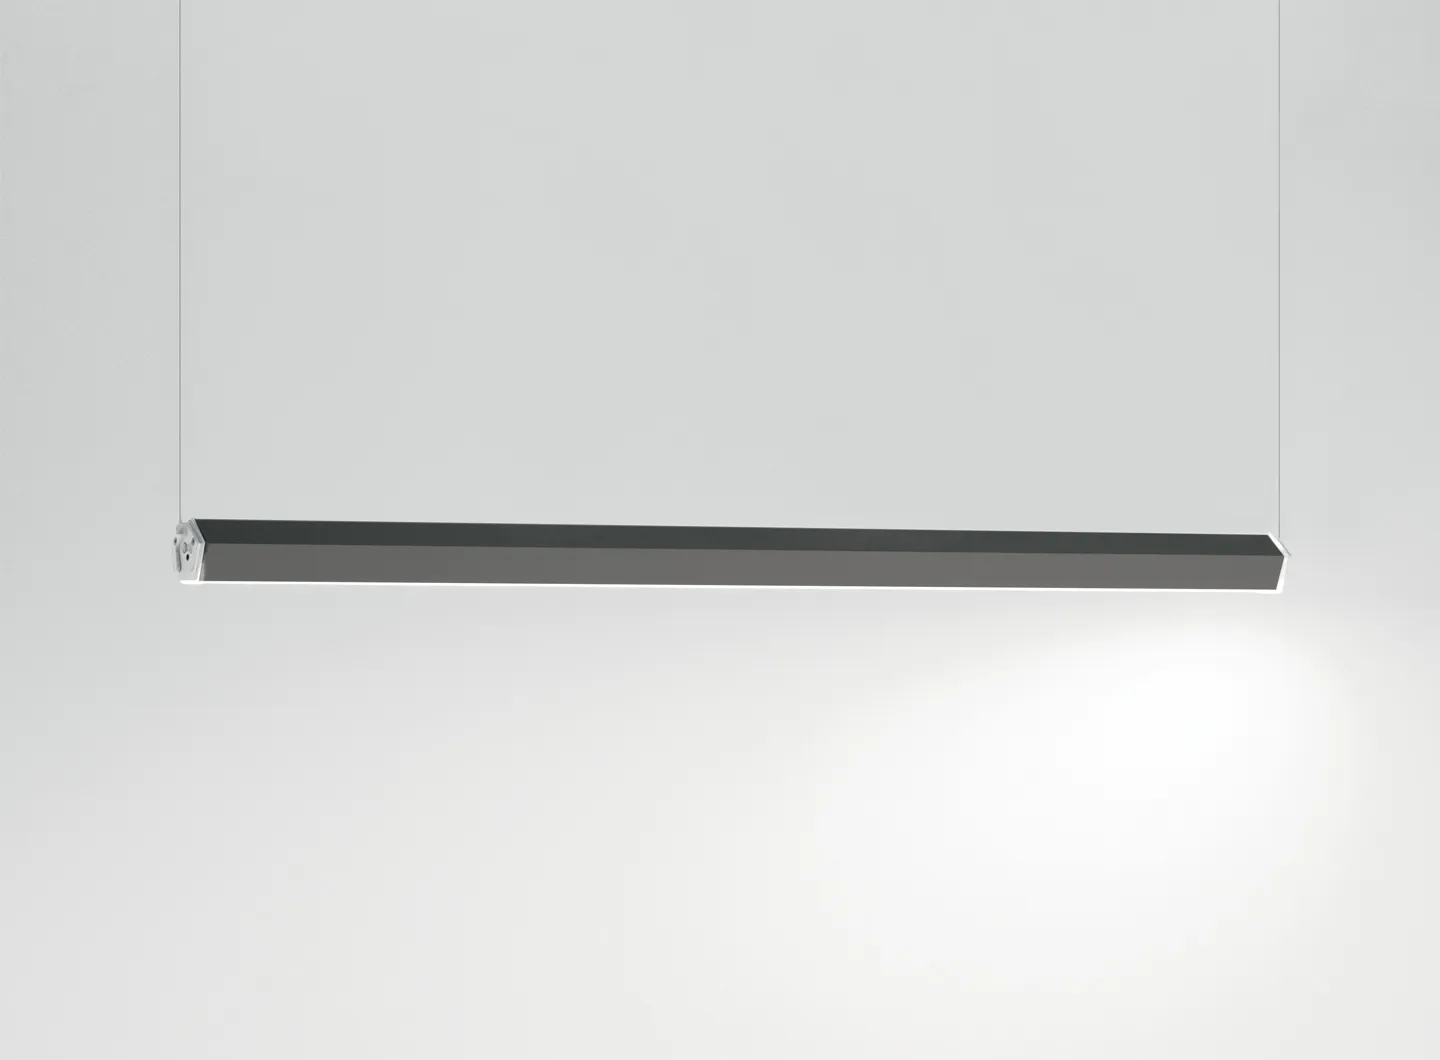 Zafferano _ Pencil horizontal suspension lamp, medium module with a dark grey finish